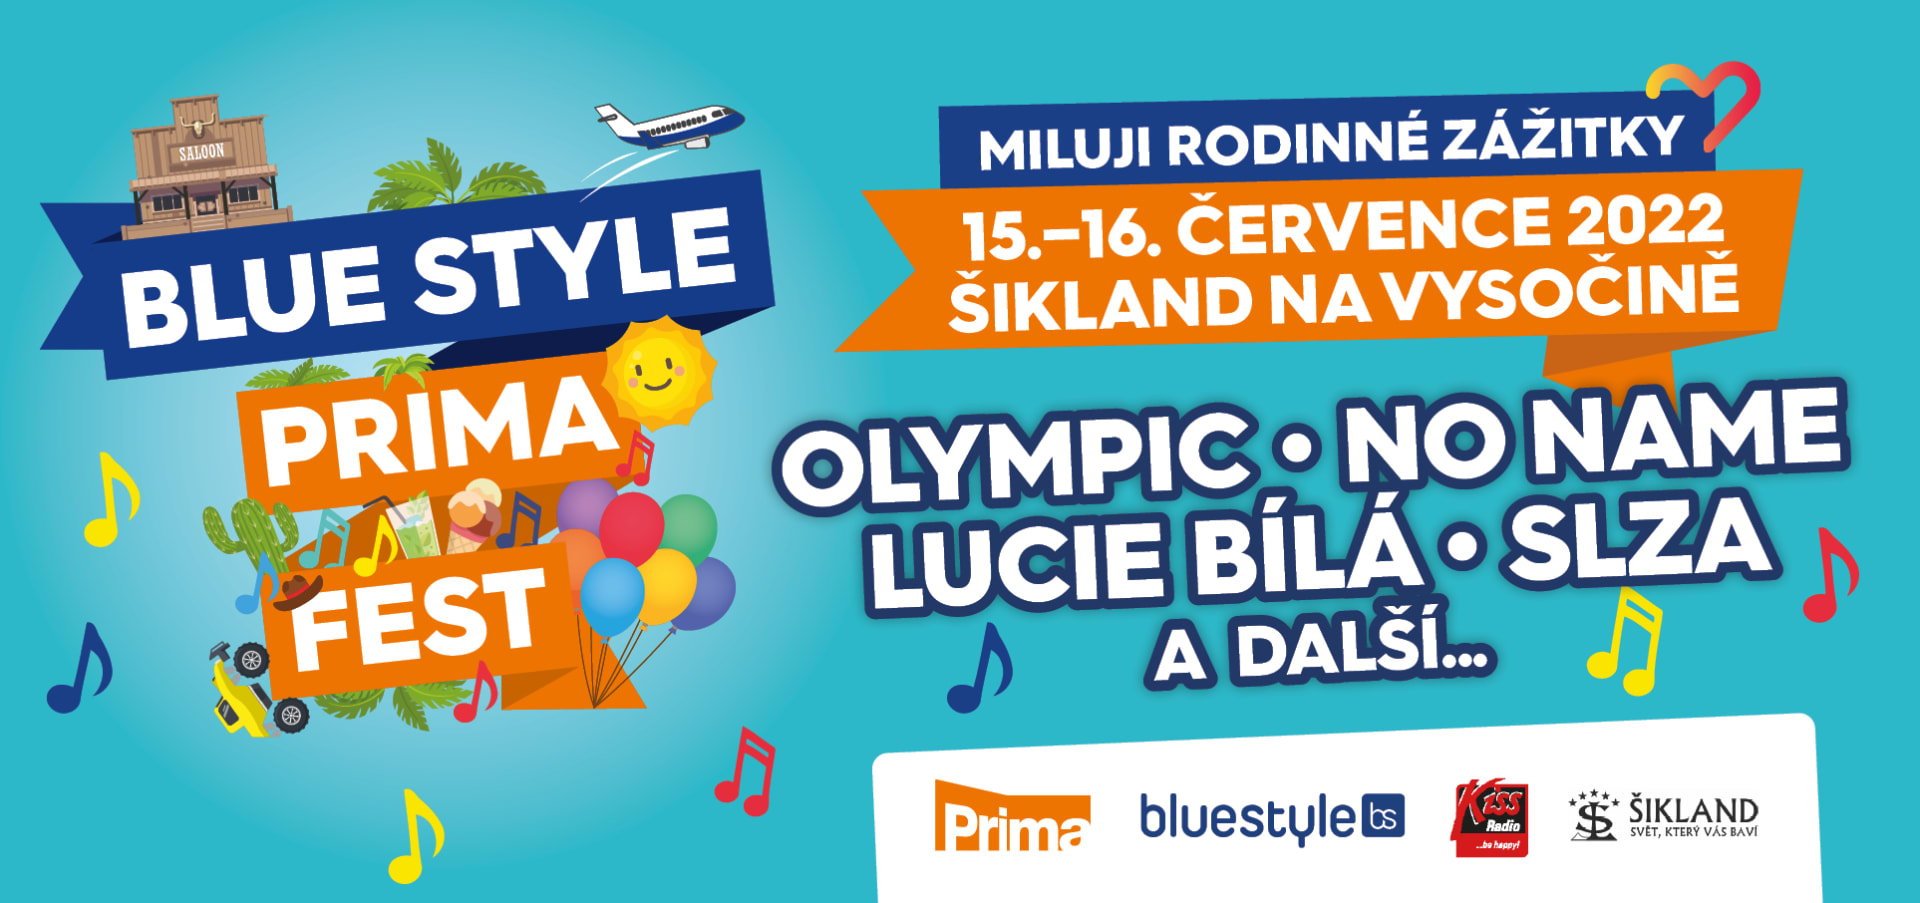 BLUE STYLE PRIMA FEST 2022